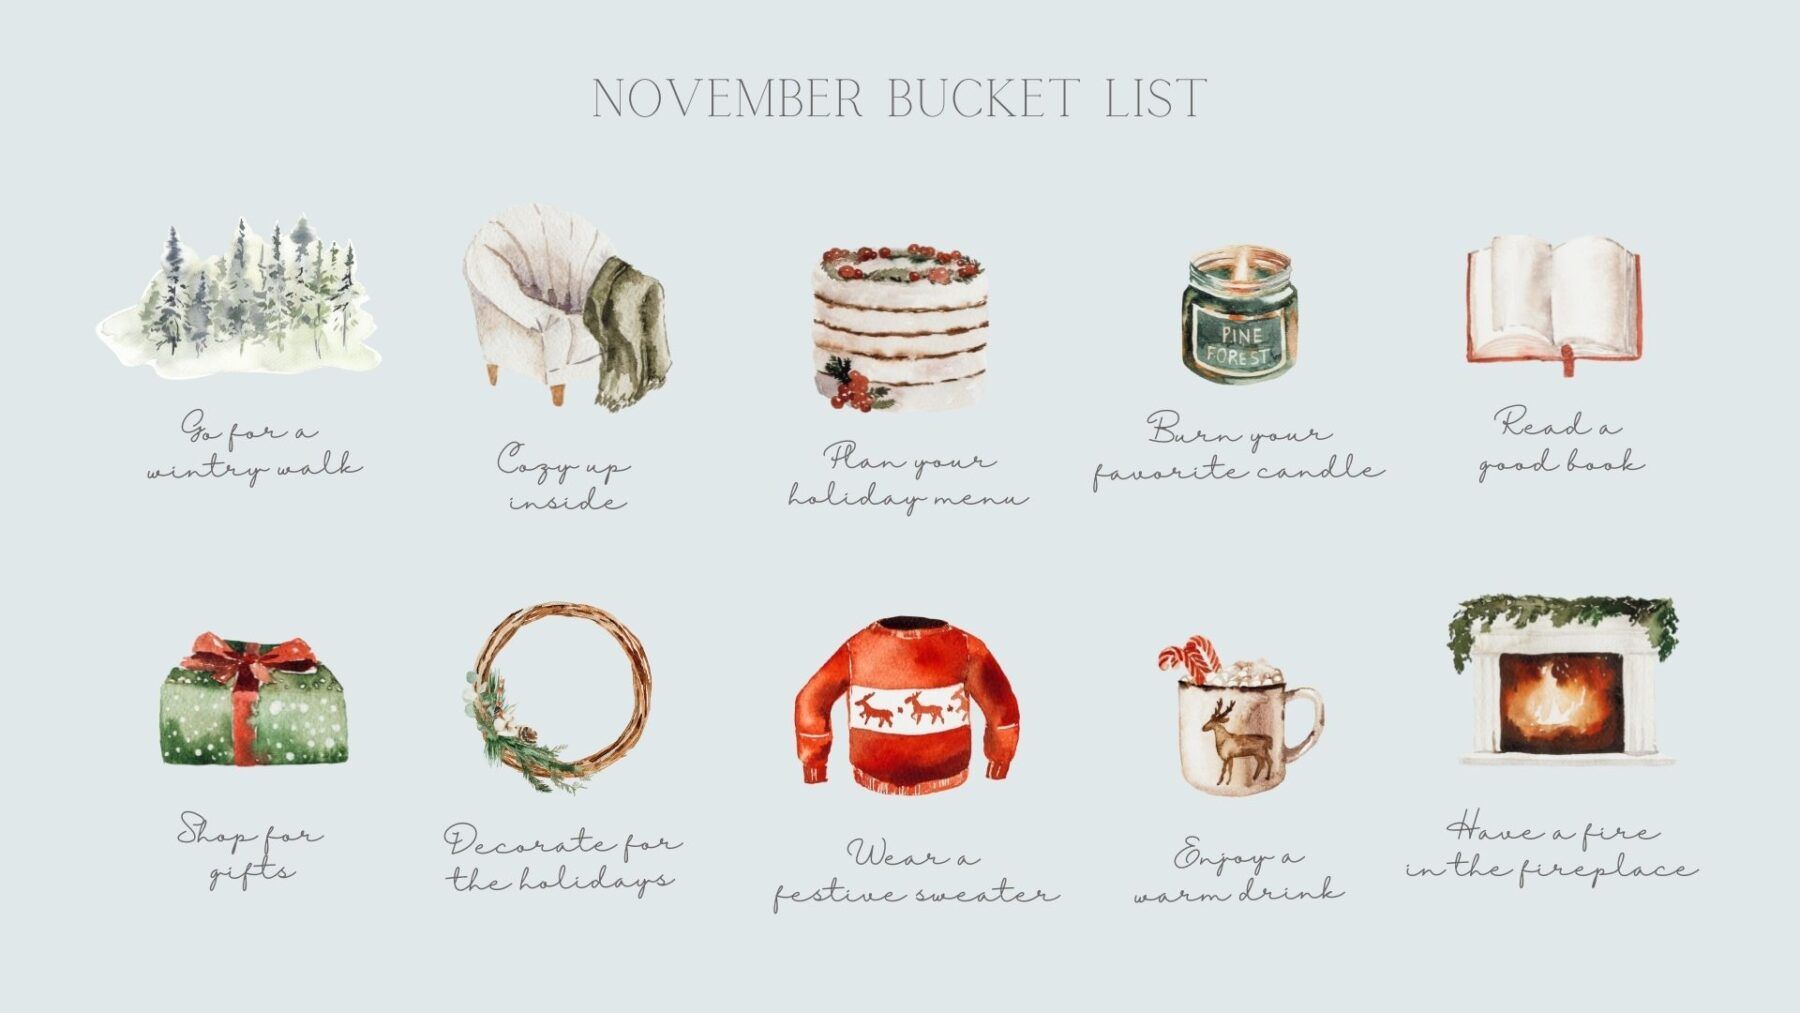 The november bucket list - November